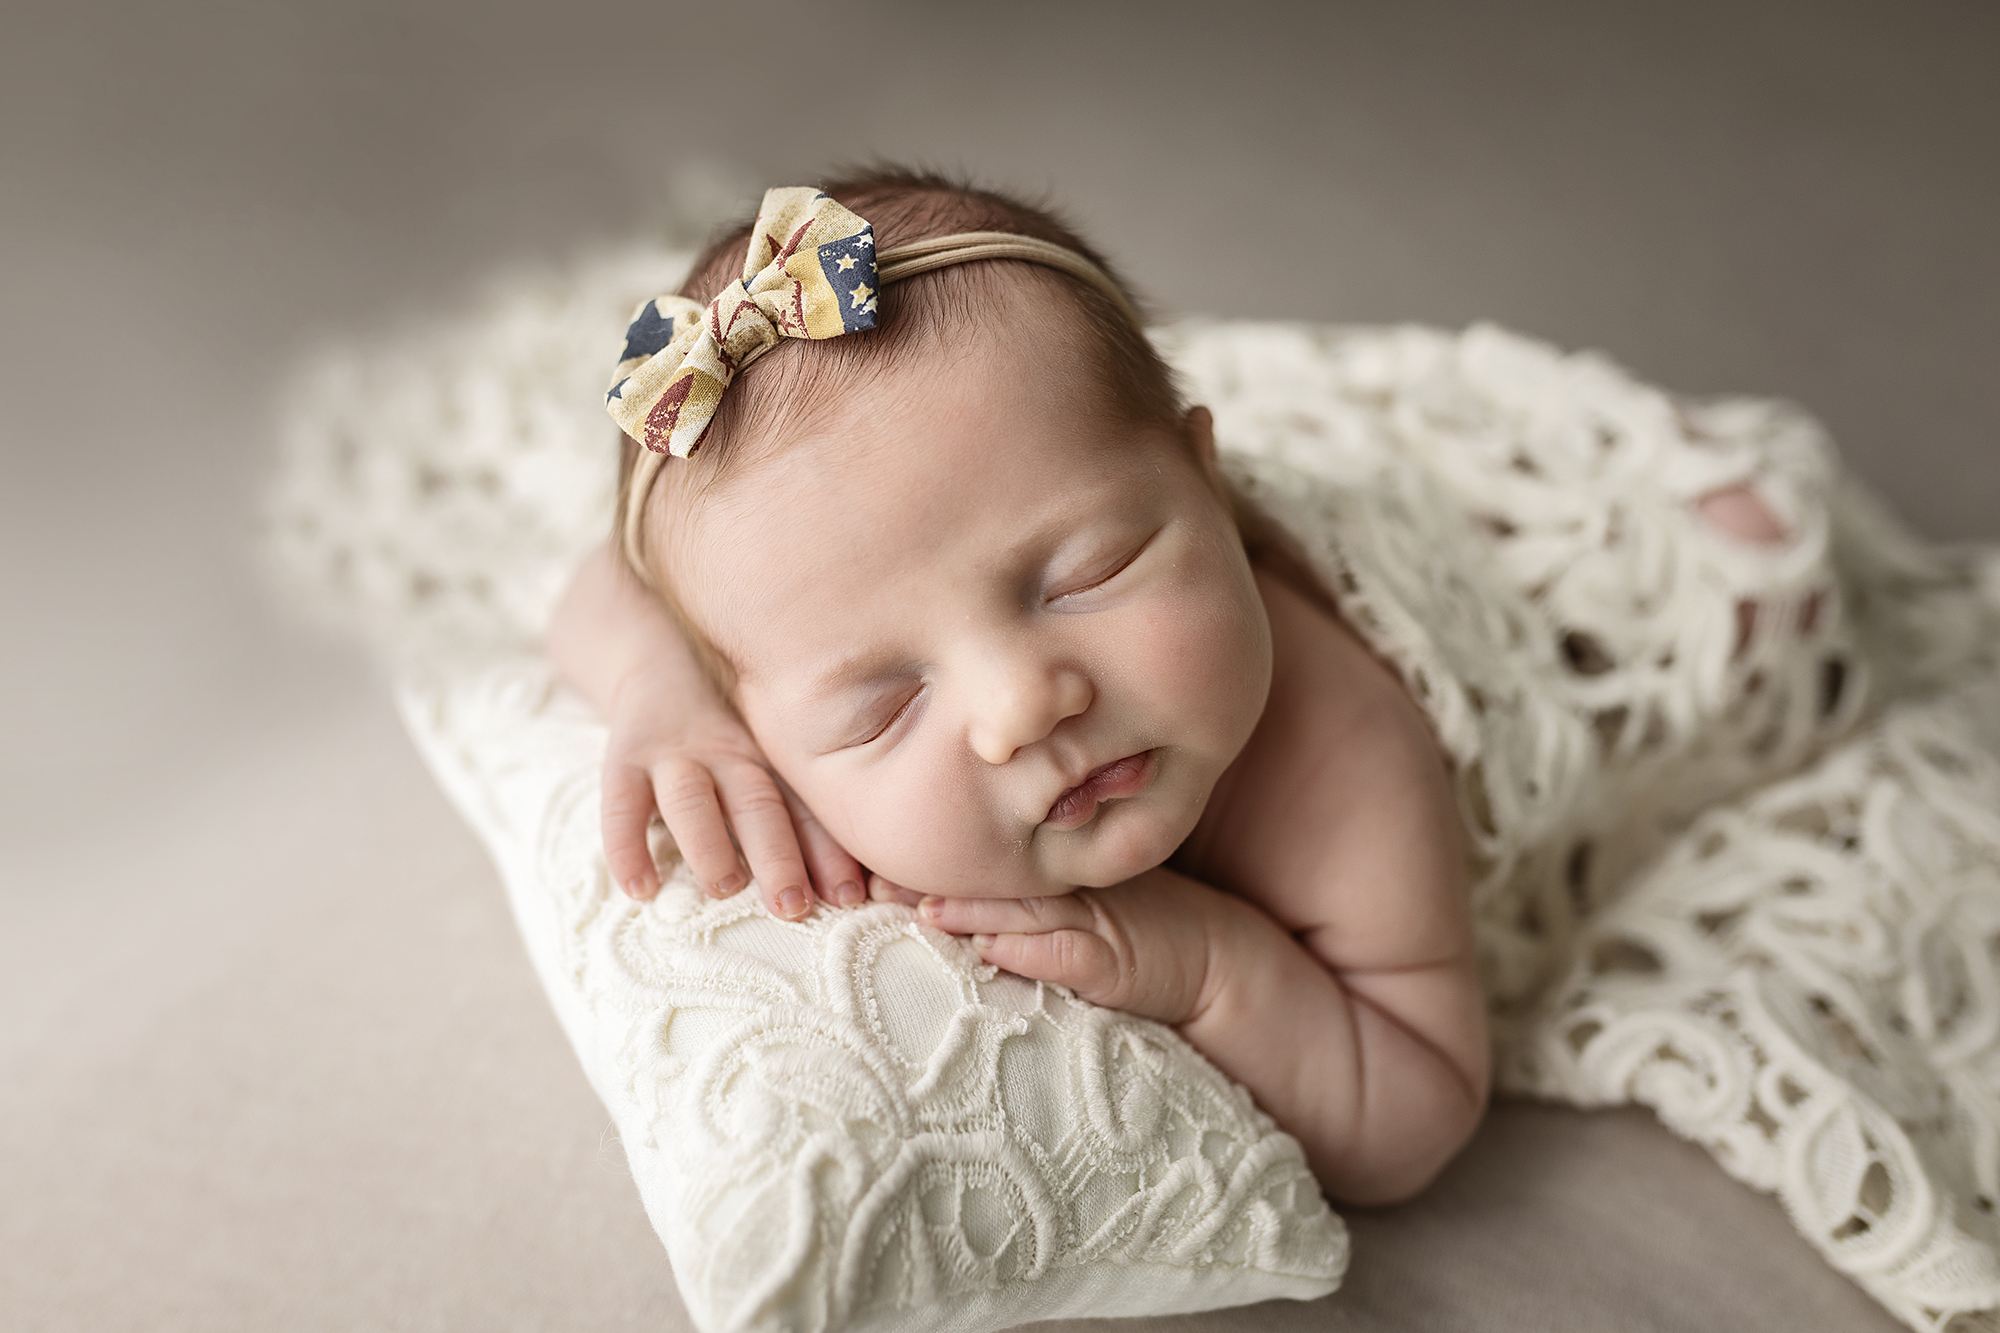 Baby girl asleep on a crocheted pillow.